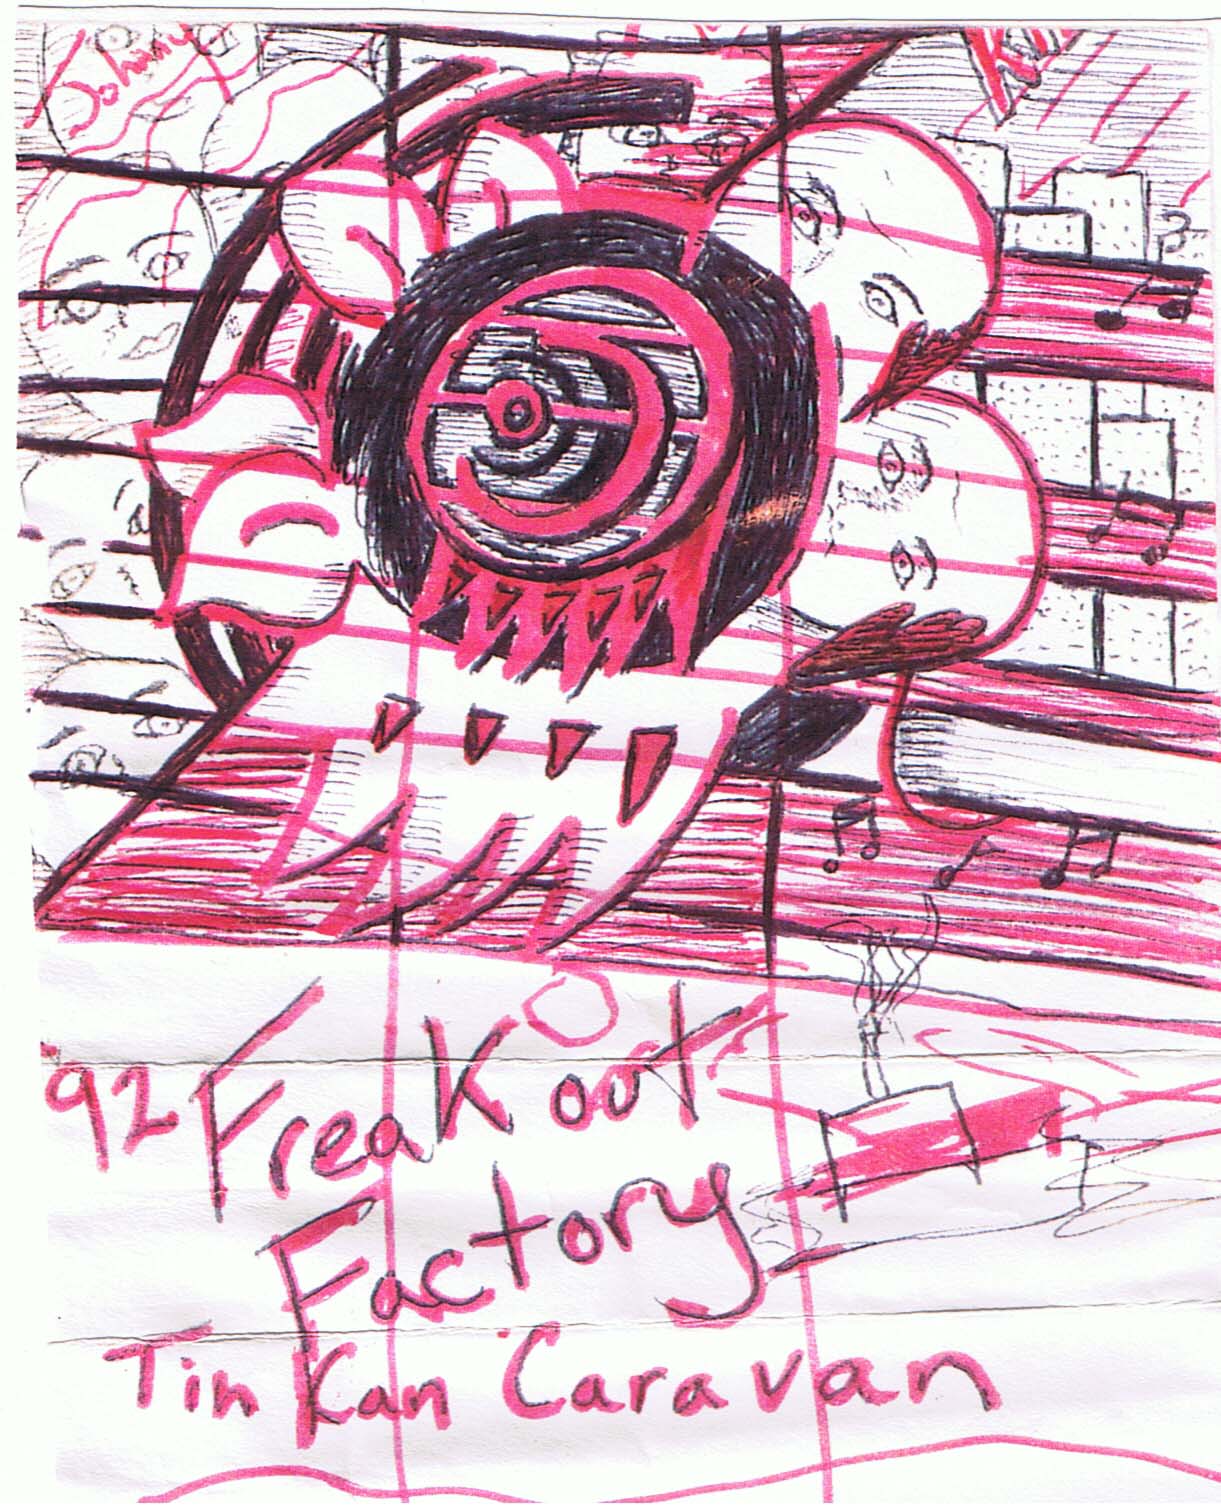 Freakout Factory